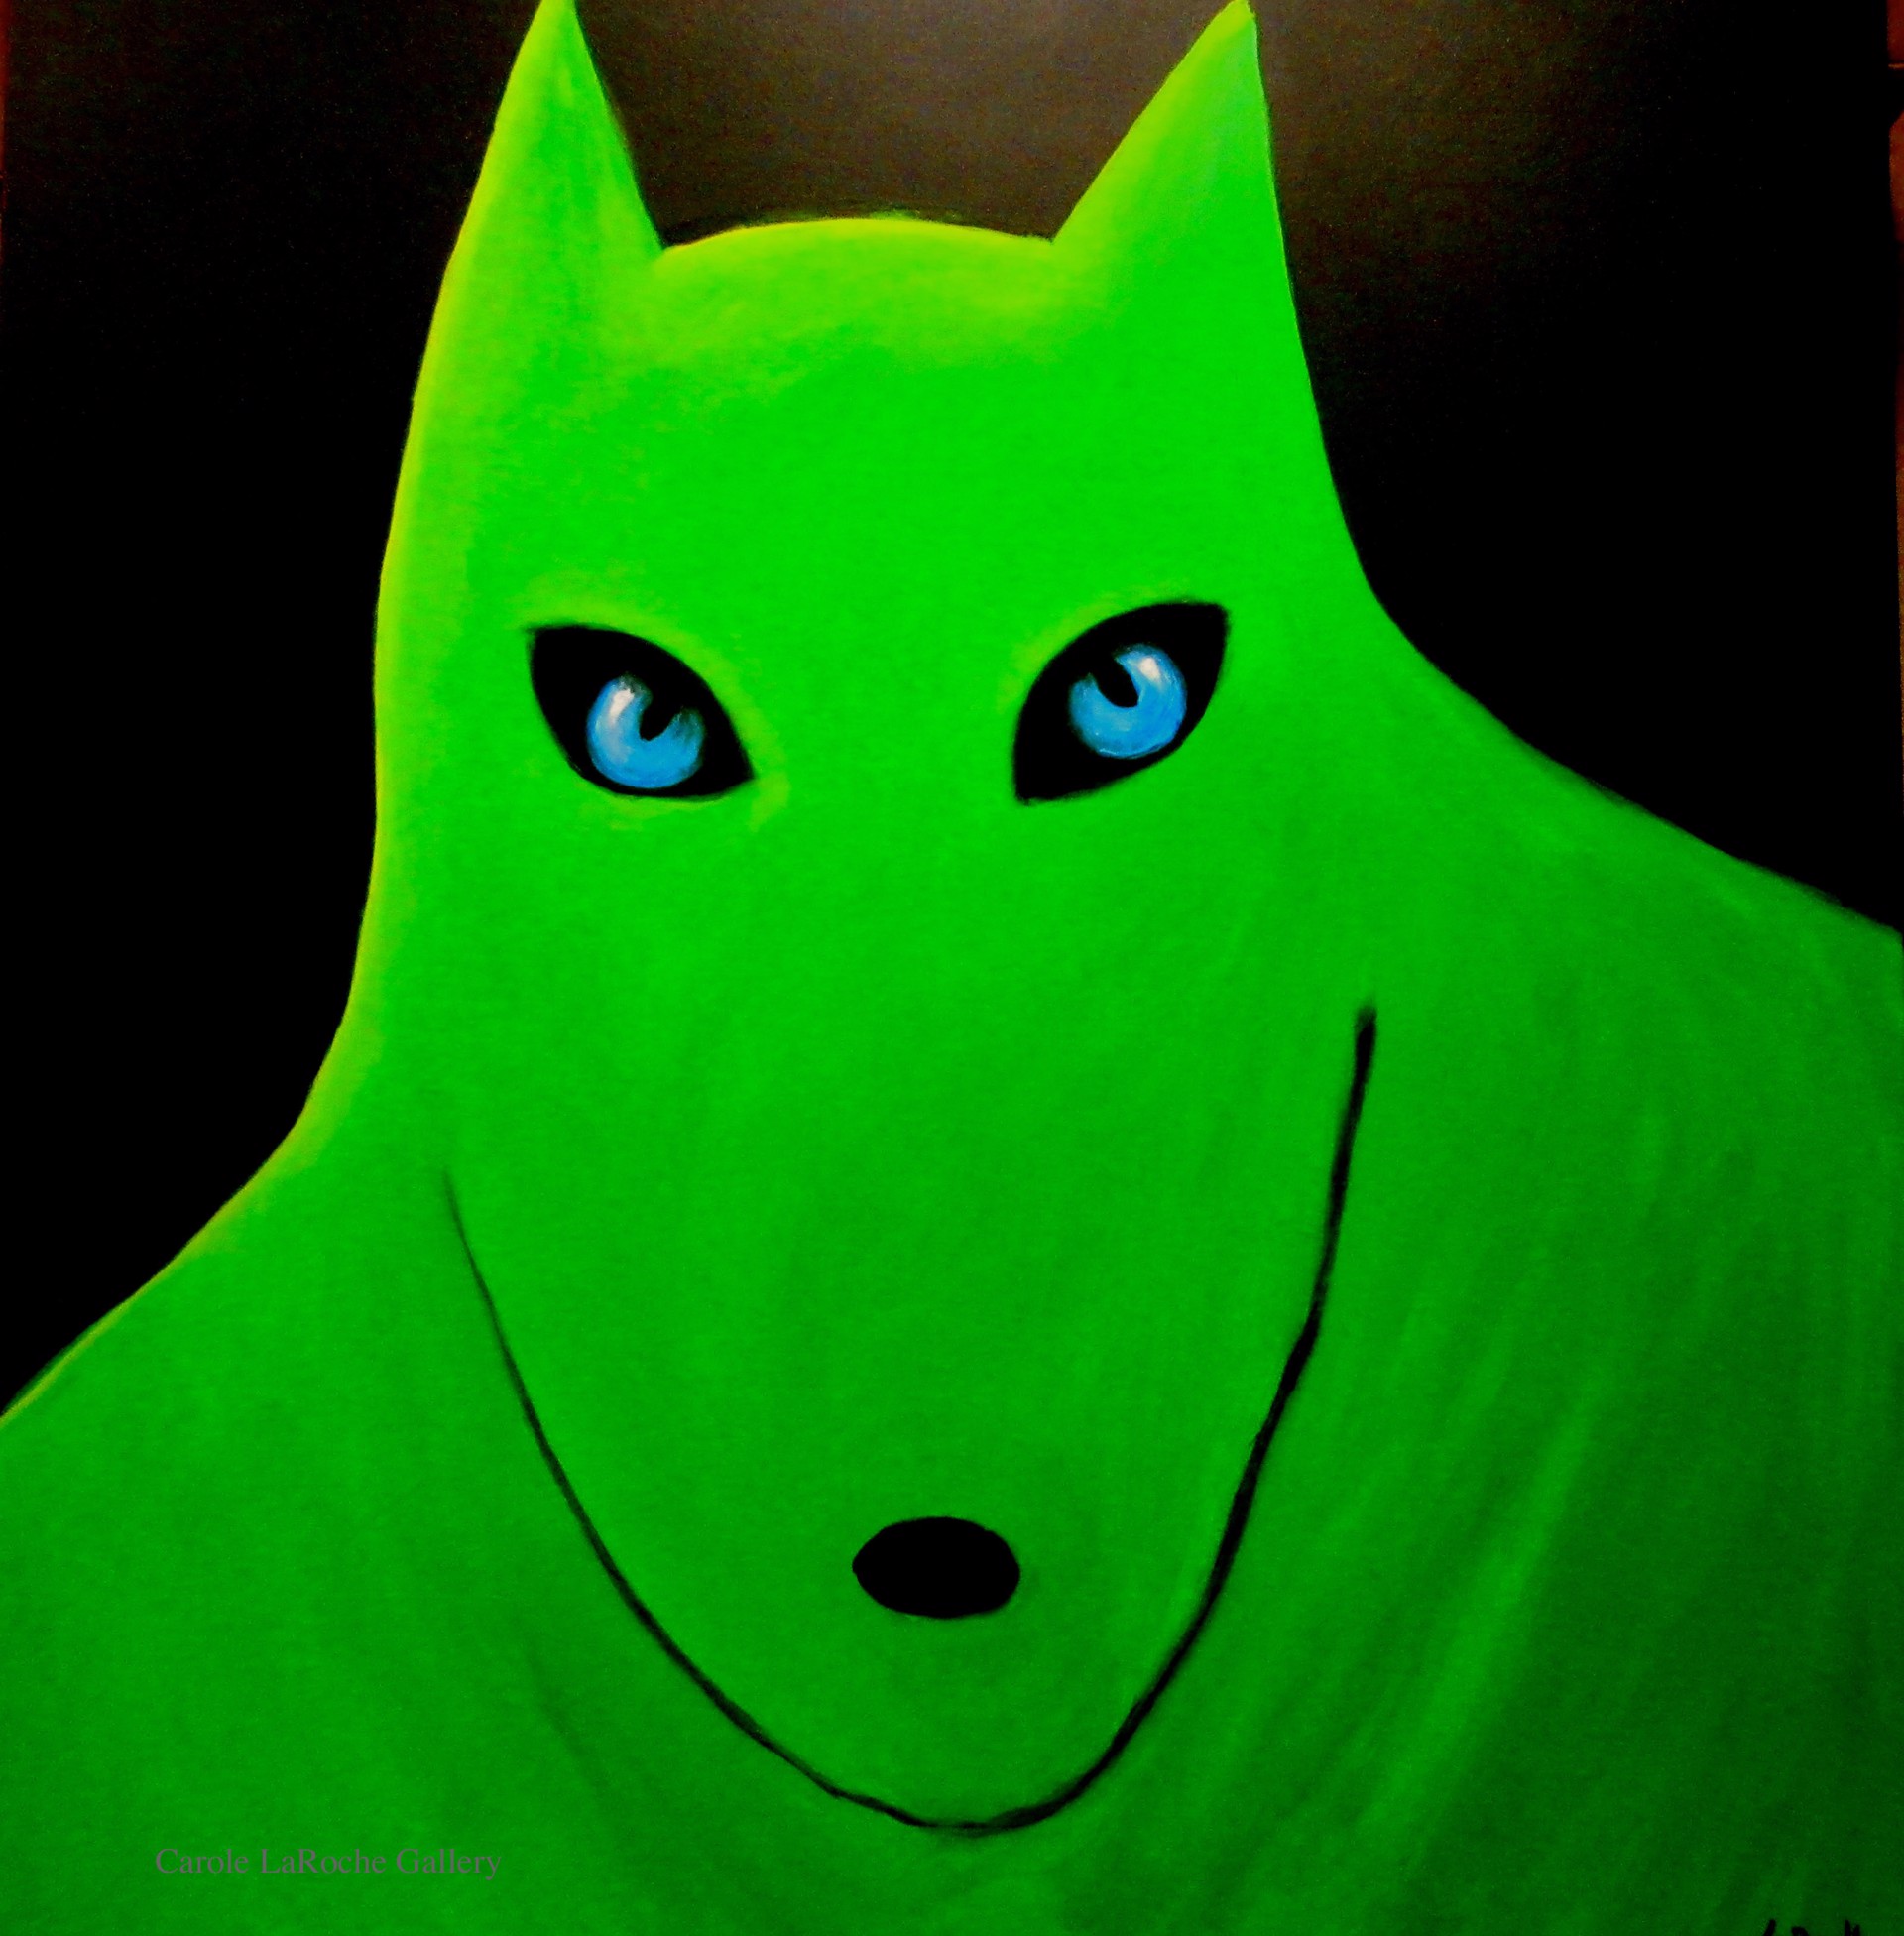 Green wolf by Carole LaRoche